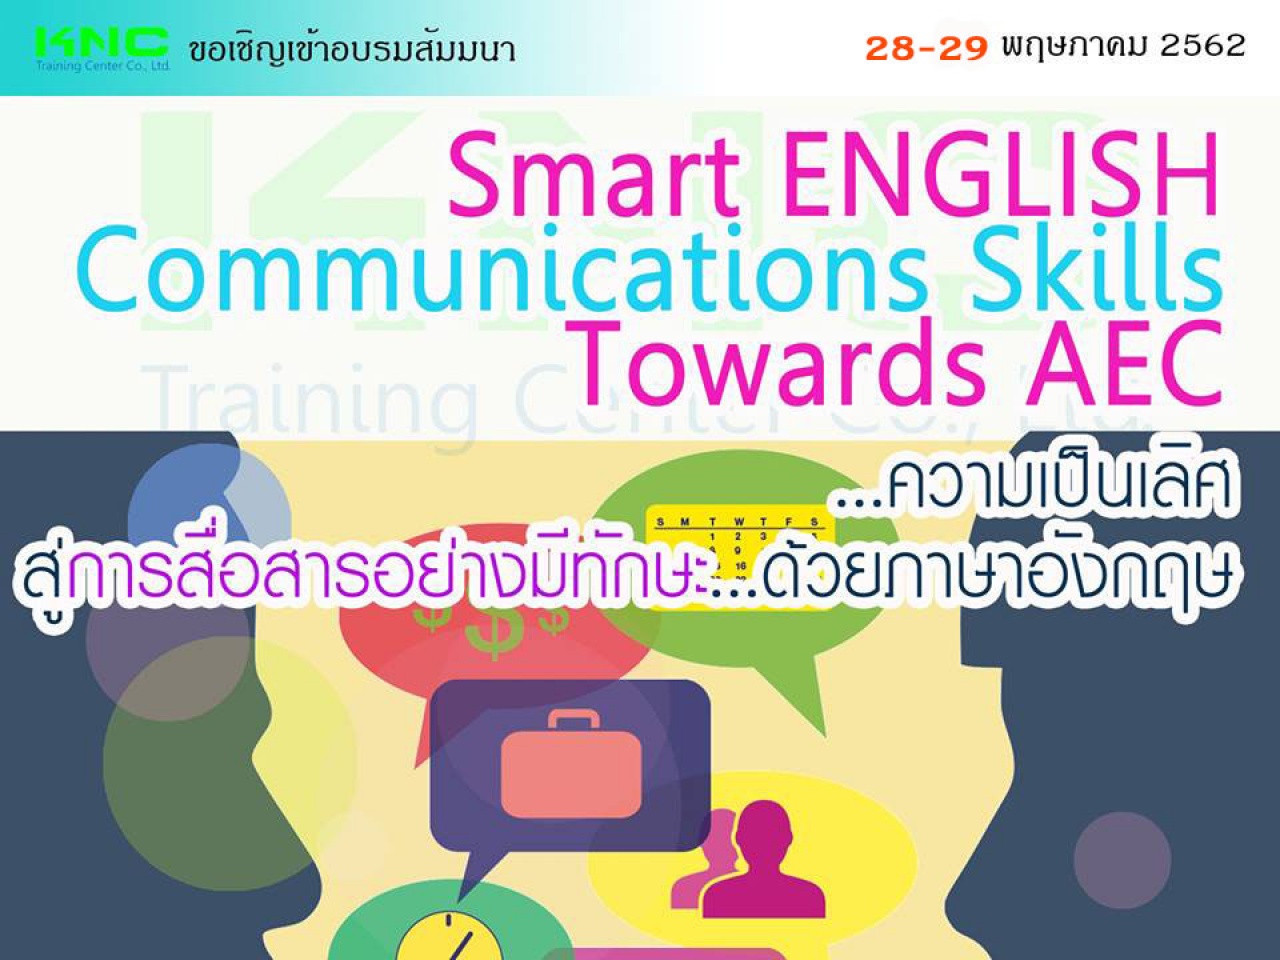 Smart ENGLISH Communications Skills Towards AEC (ความเป็นเลิศ...สู่การสื่อสารอย่างมีทักษะ...ด้วยภาษาอังกฤษ)